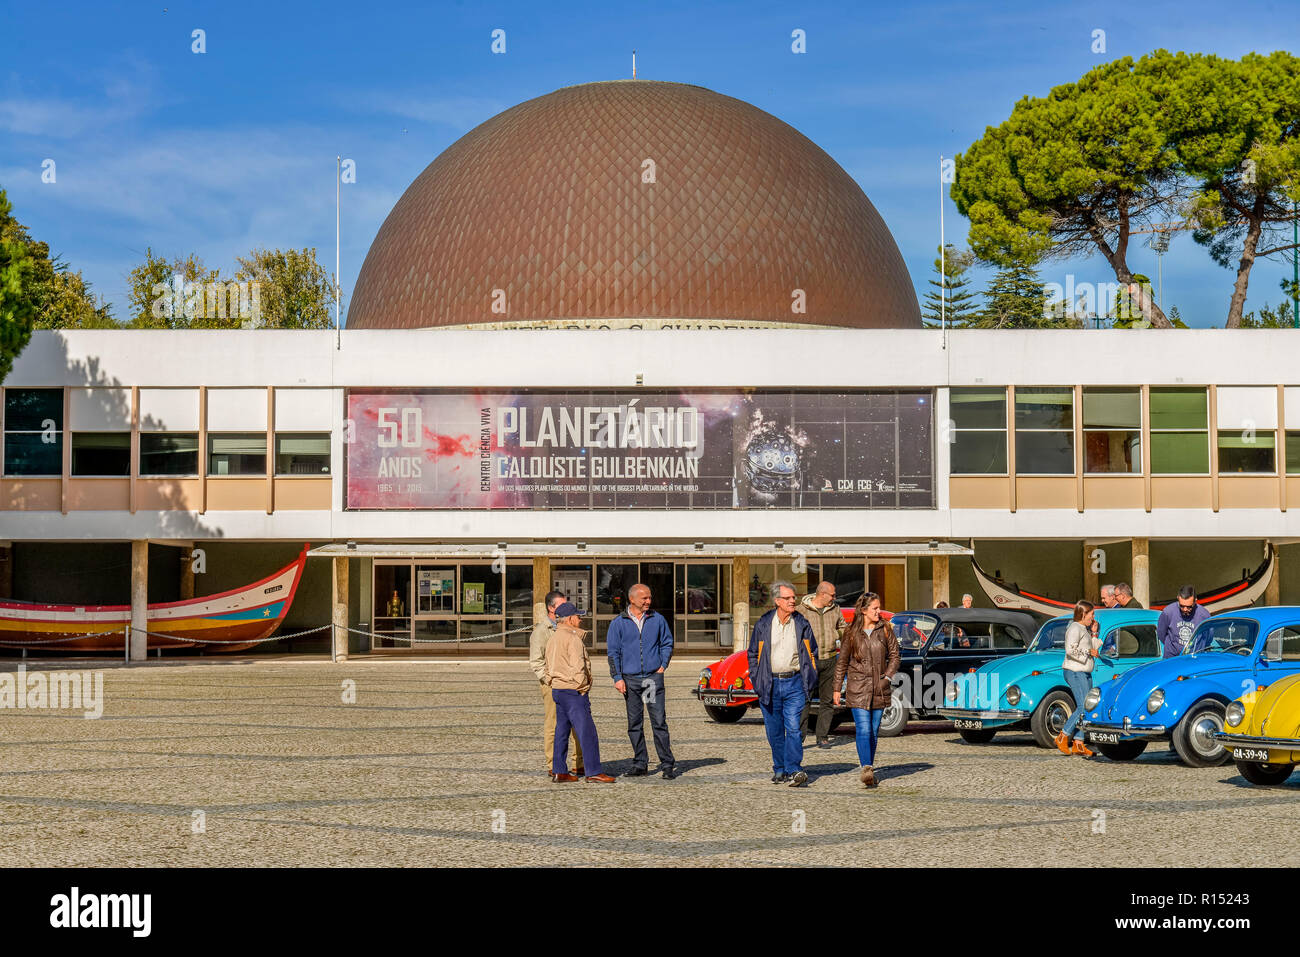 Planetarium Planetario Calouste Gulbenkian, Belem, Lissabon, Portugal Stock Photo